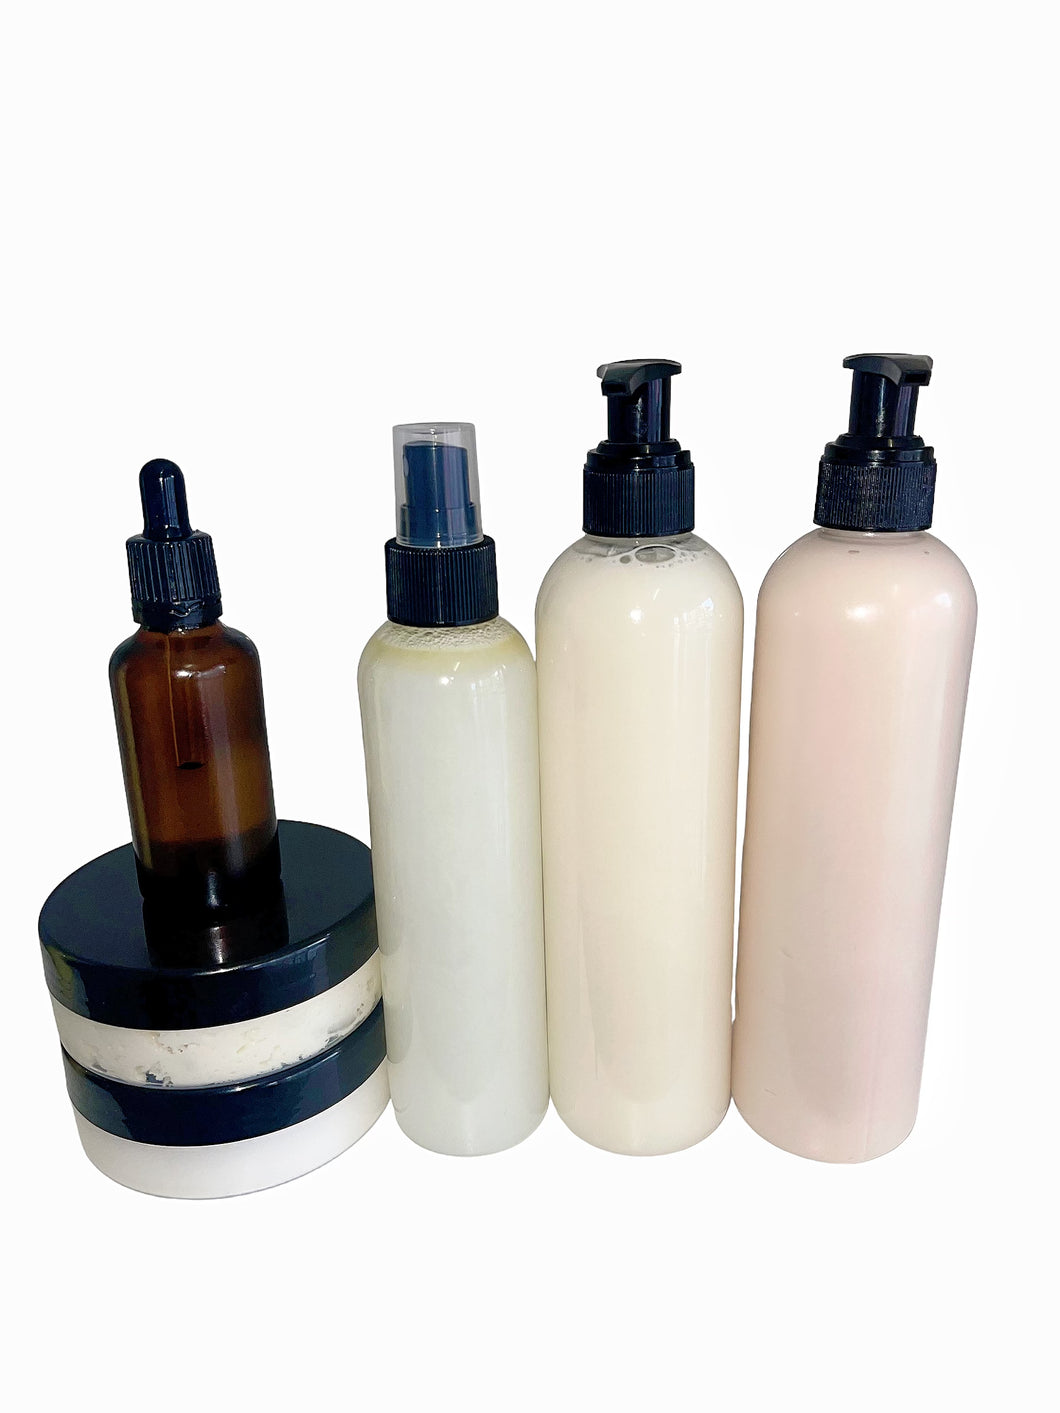 Black castor oil and olive oil haircare range - for hair growth